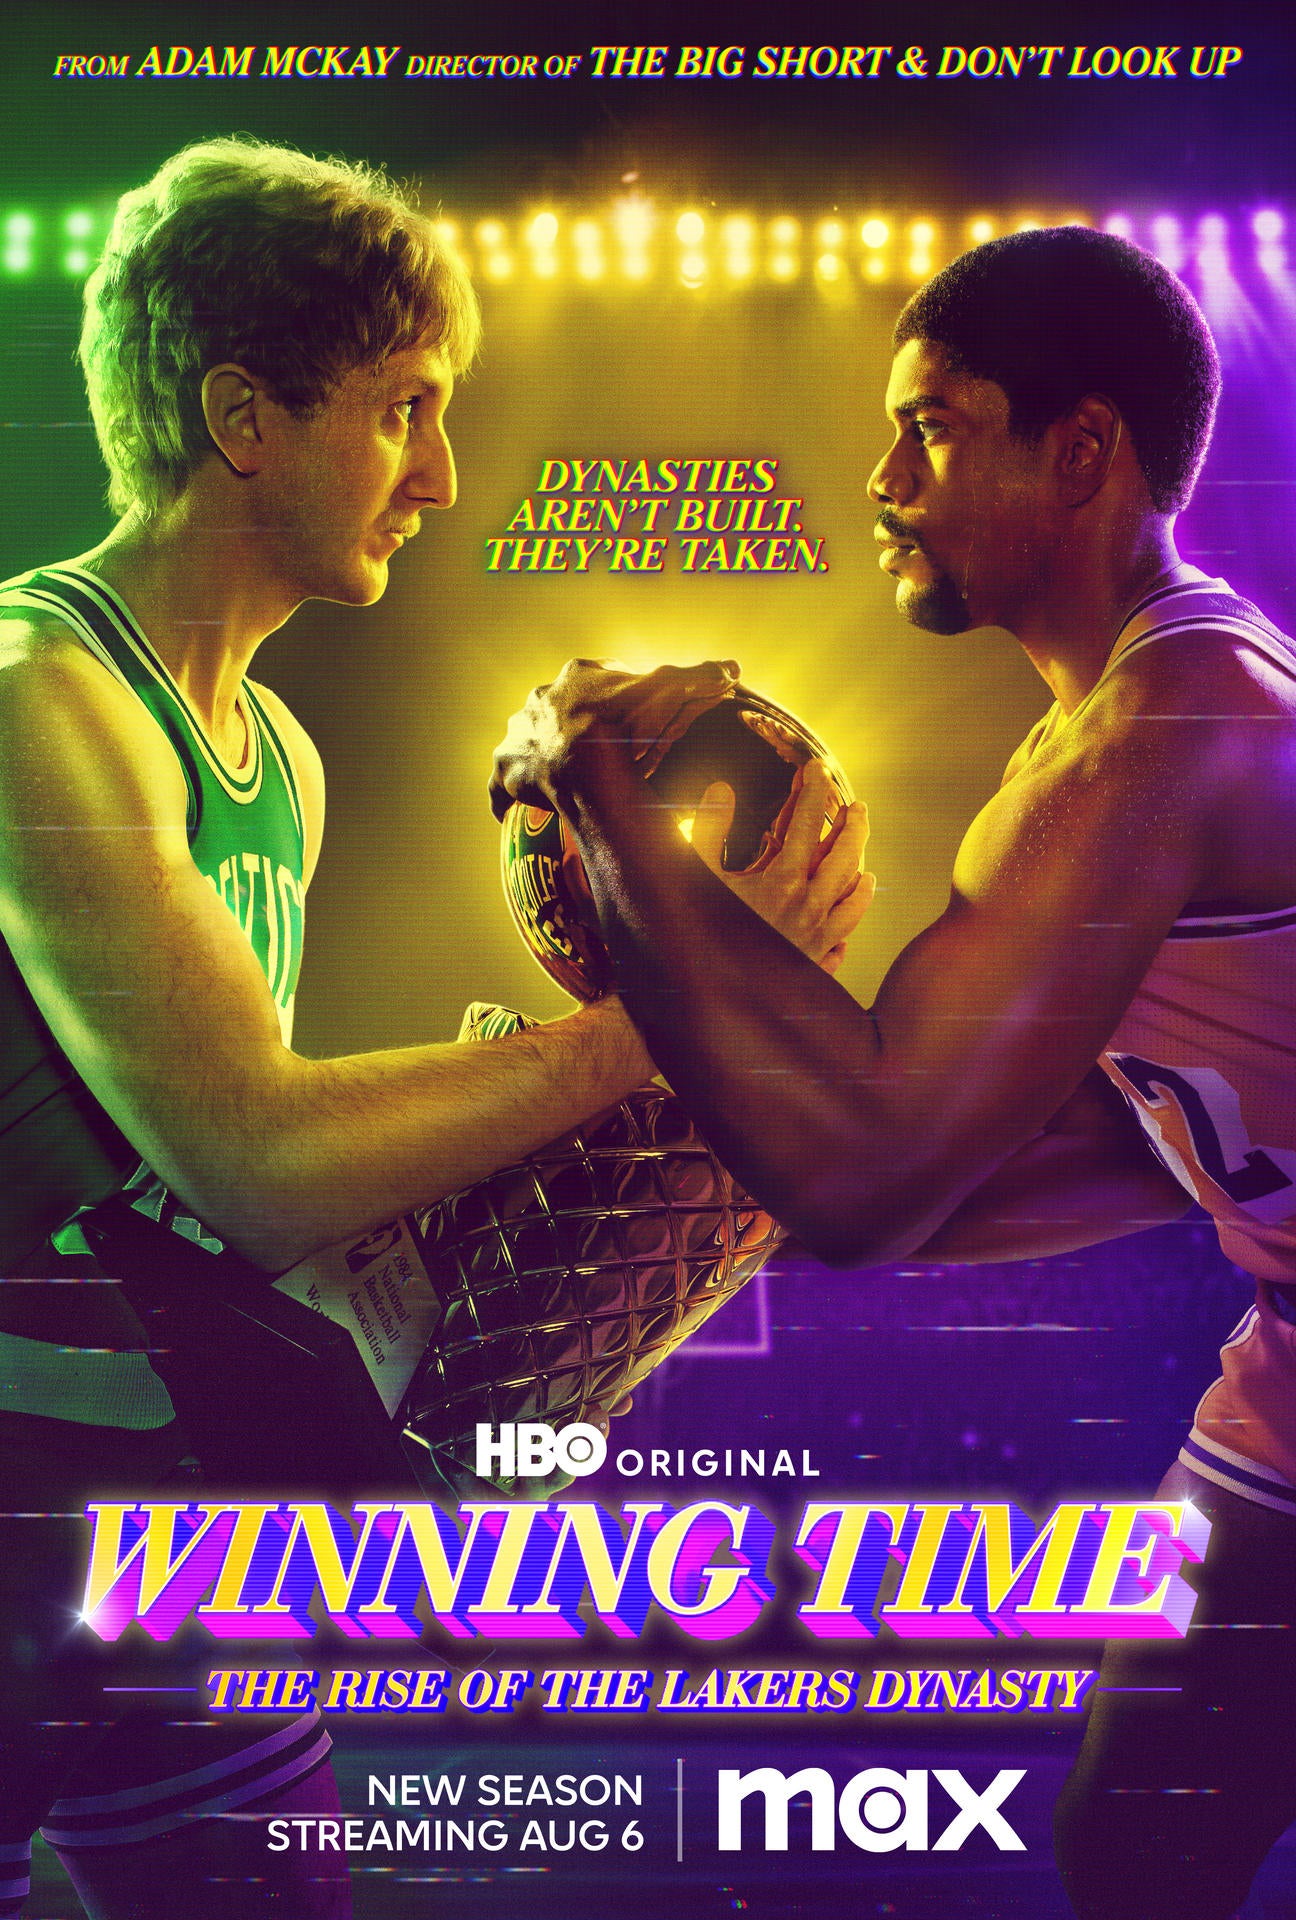 HBO Teases Shaq and Kobe Era Series for Season 2 of 'Winning Time